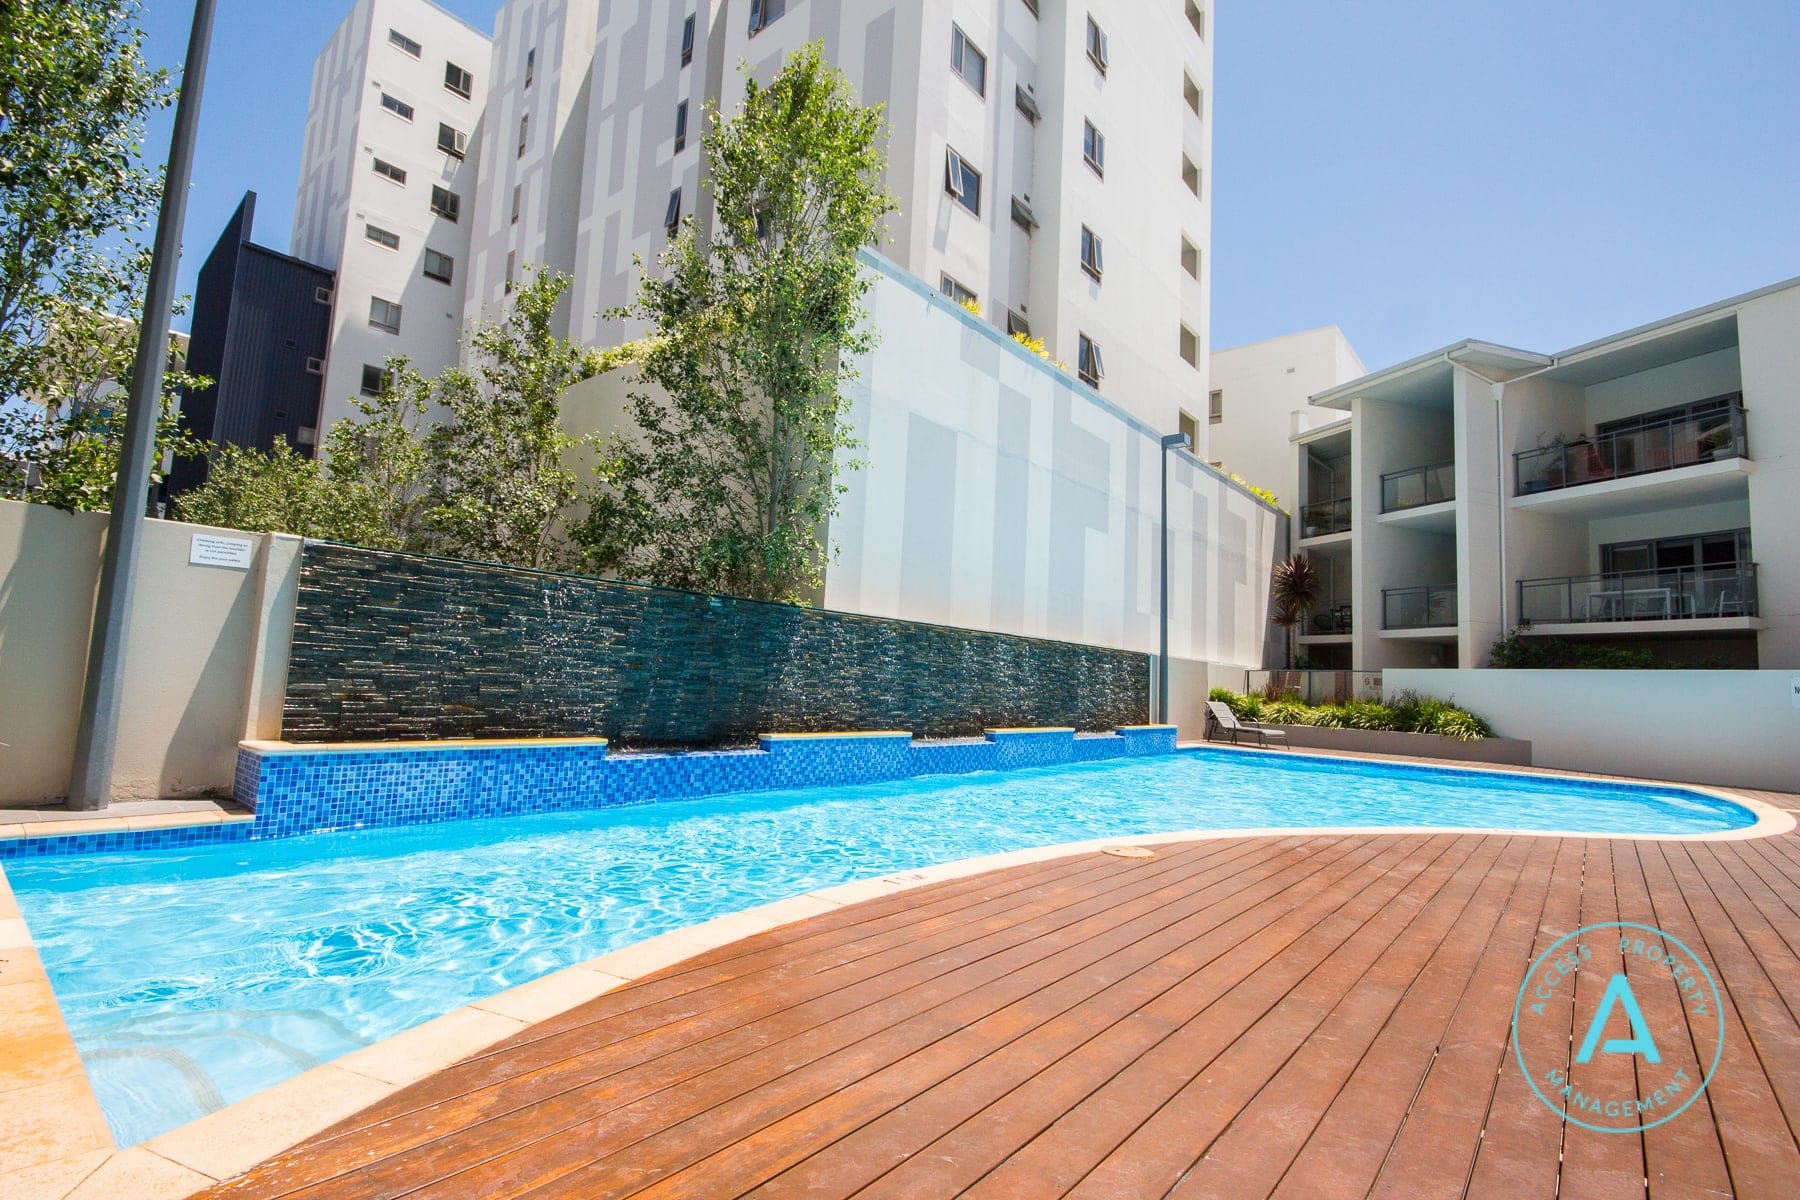 Access Property Management 65/4 DELHI STREET Swimming pool